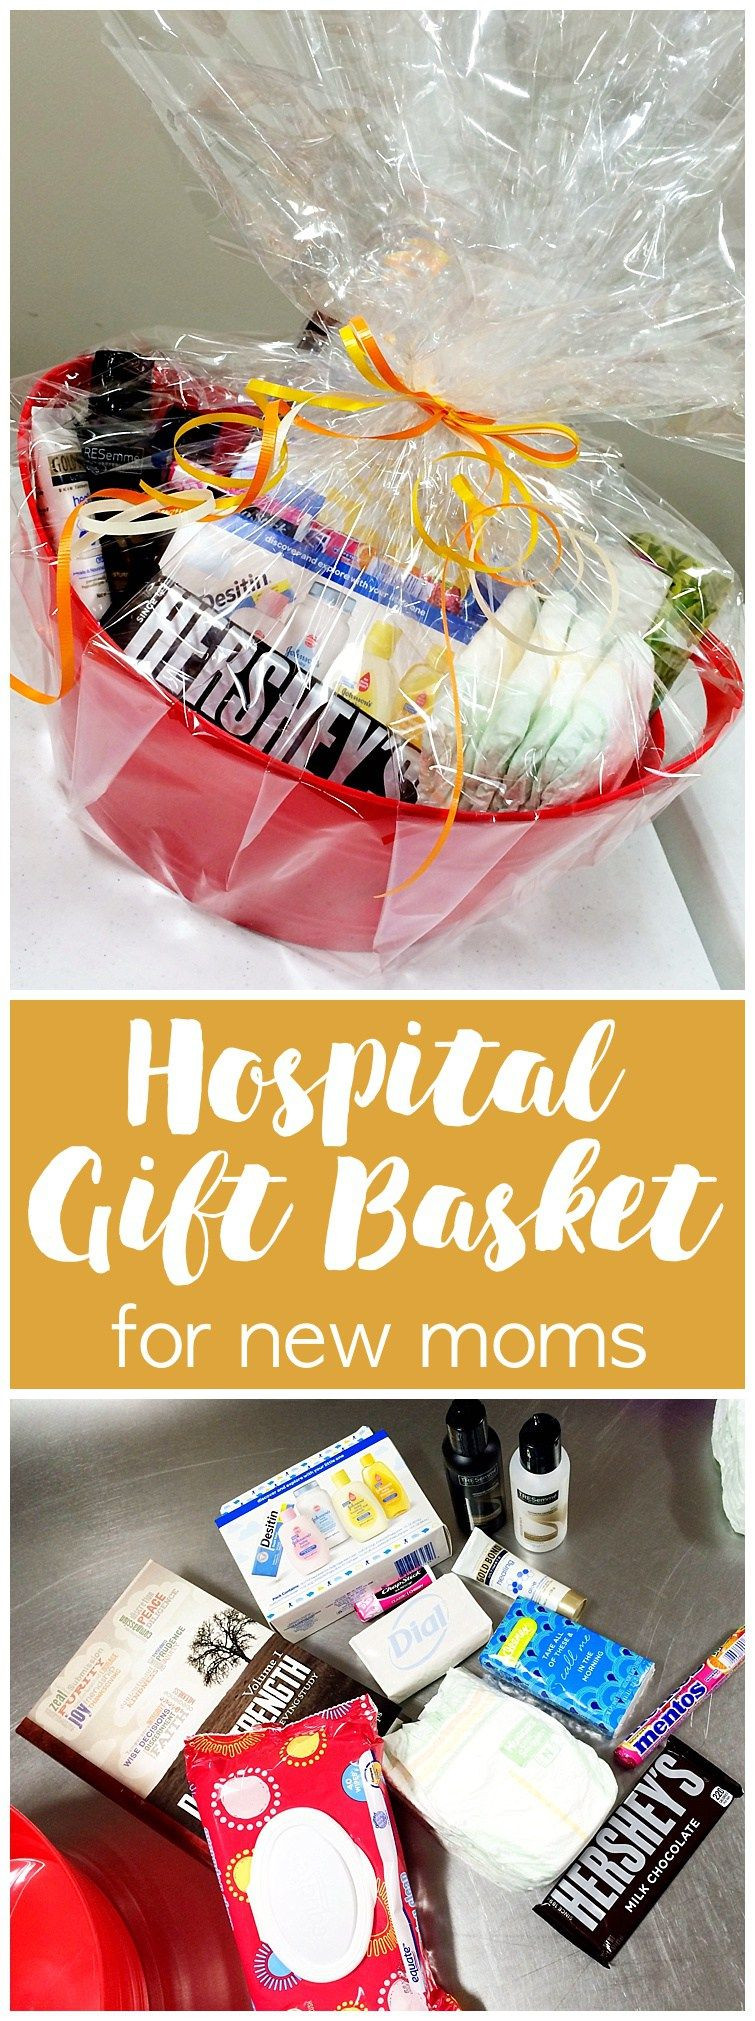 Gift Basket For Child In Hospital
 Hospital Gift Basket for a new mom